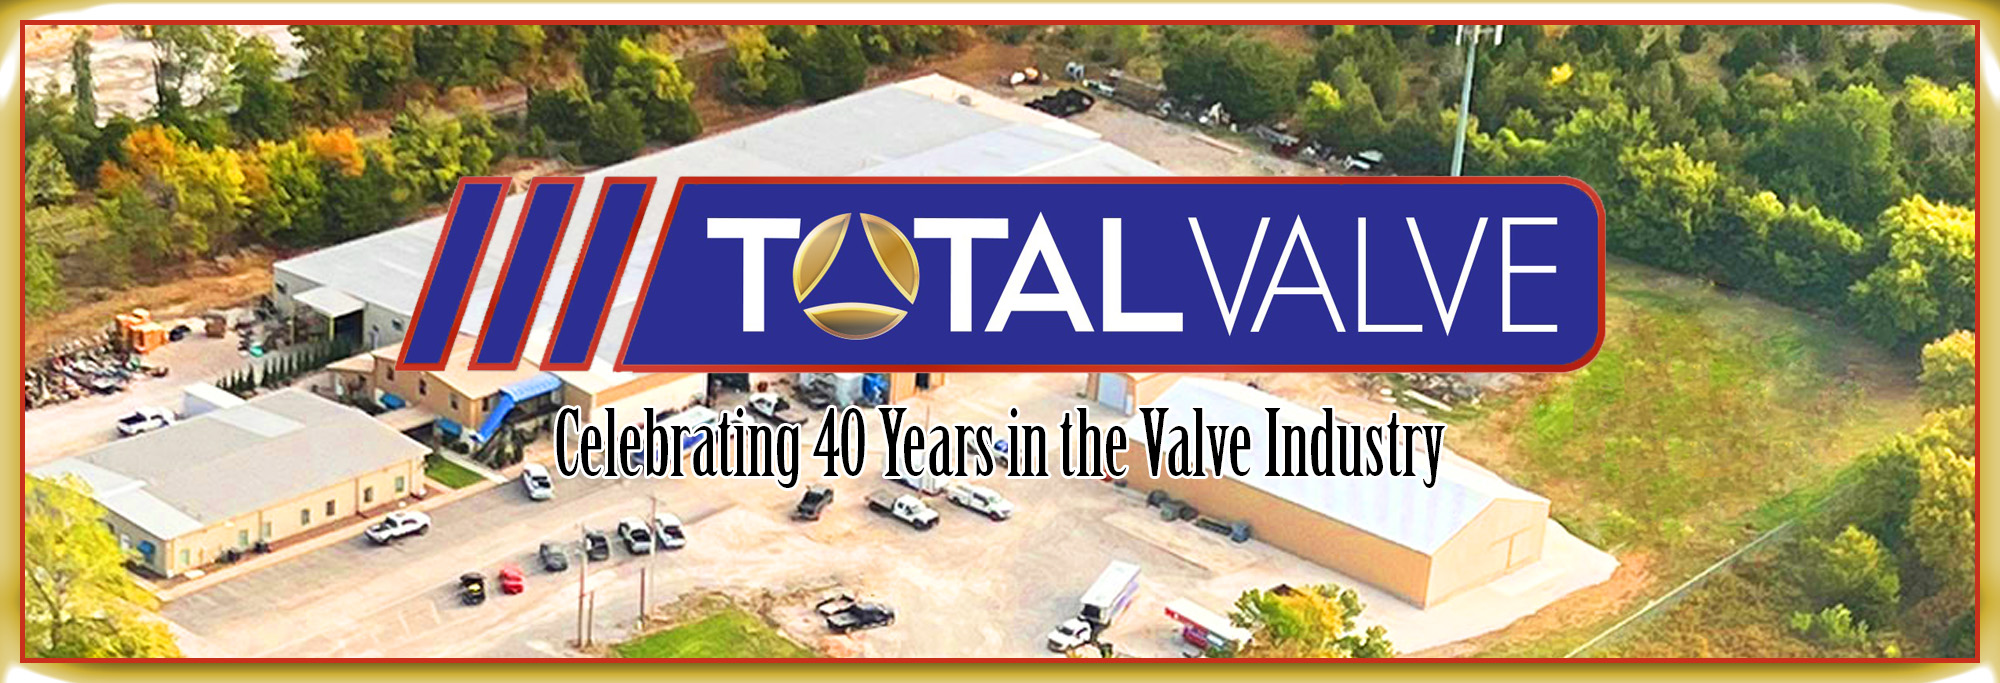 Total Valve Celebrating 40 Years